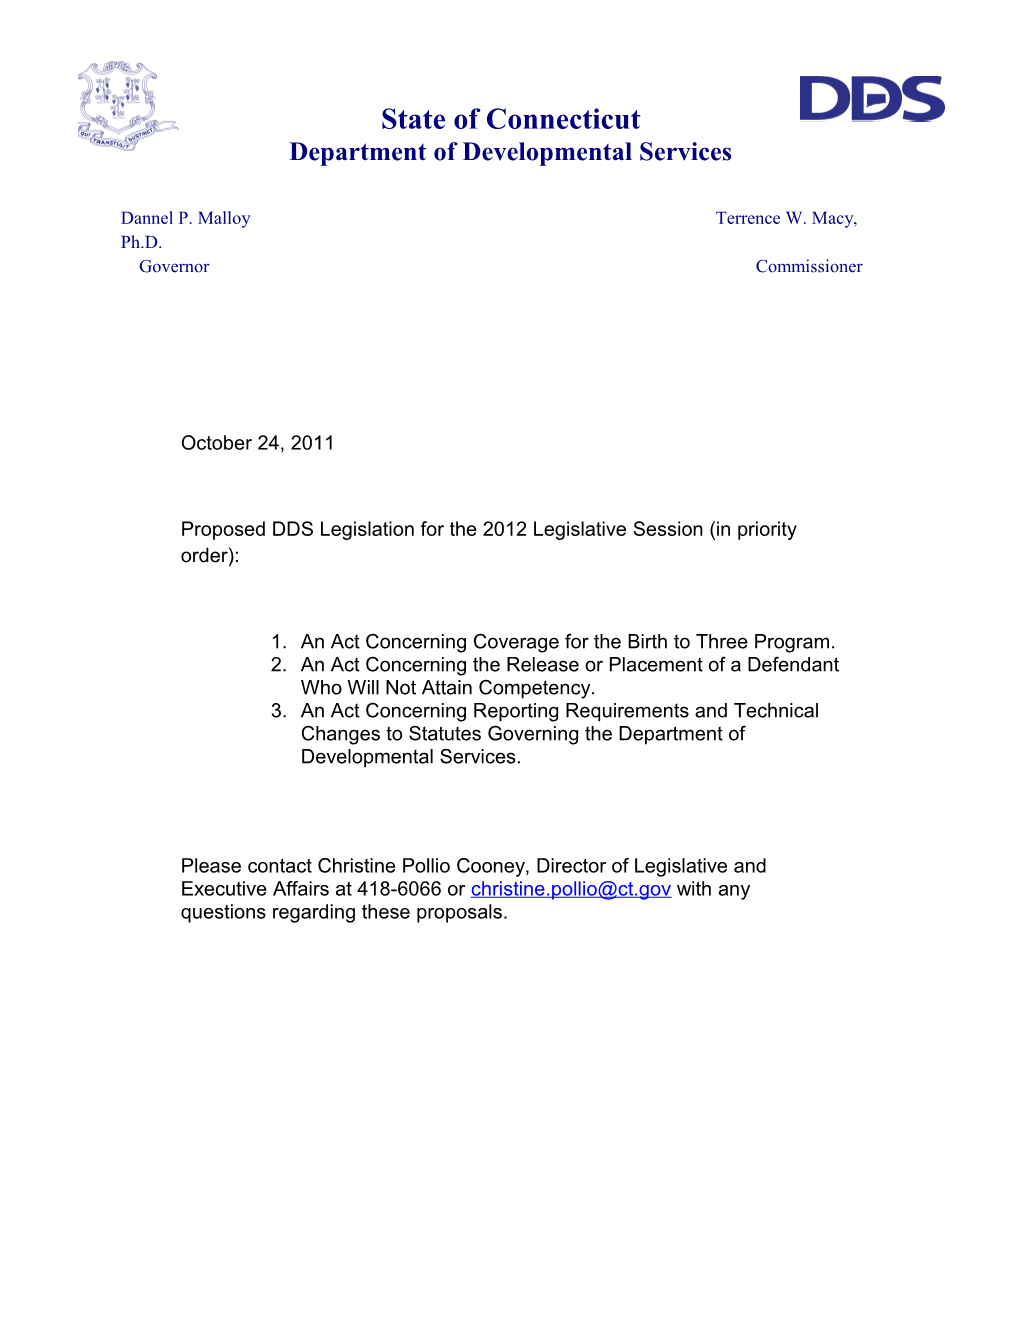 Proposed DDS Legislation for the 2012 Legislative Session (In Priority Order)